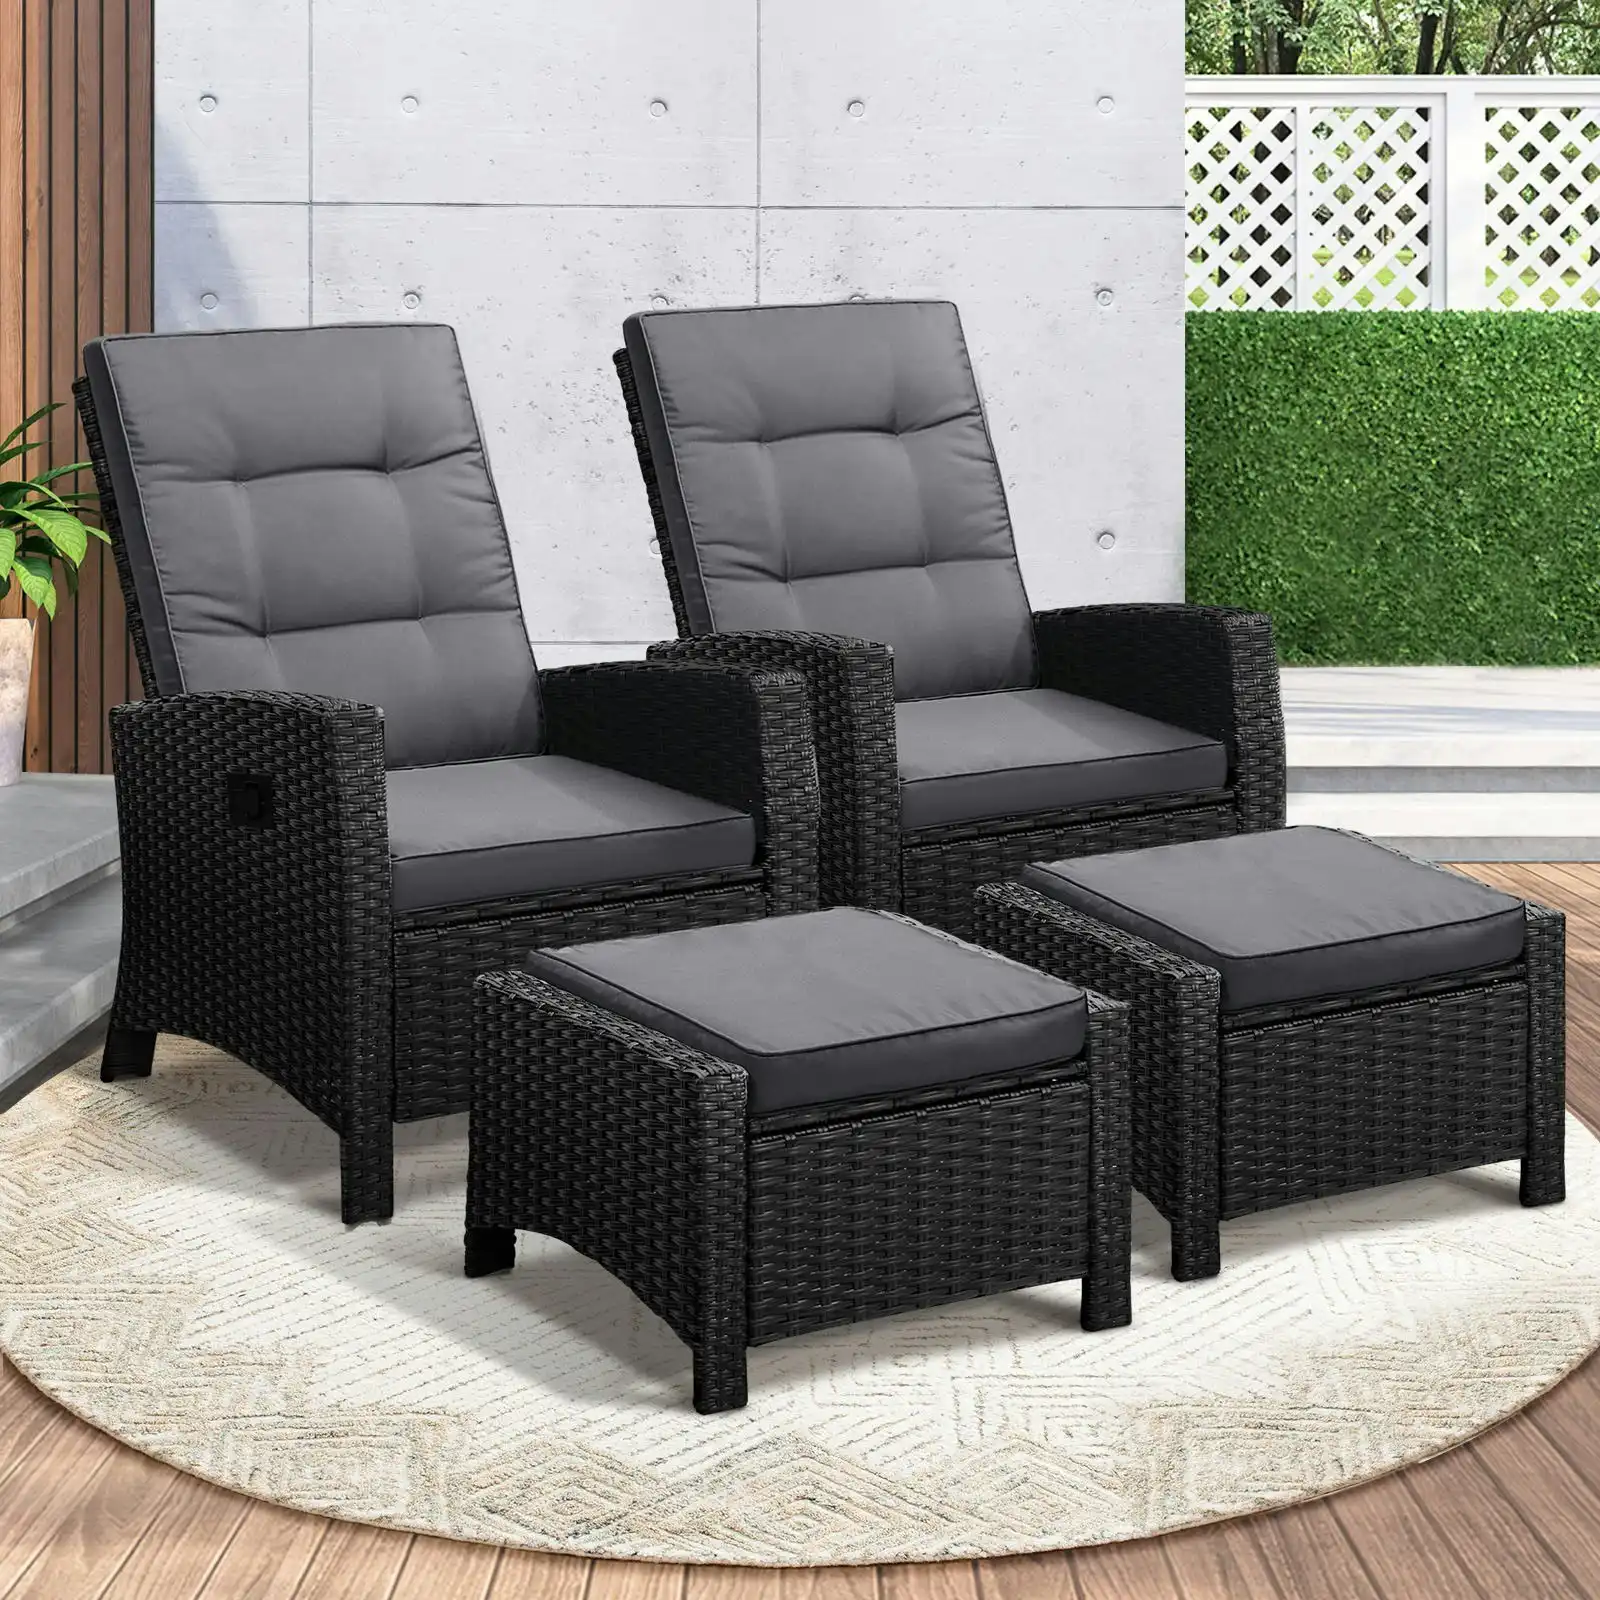 Livsip Recliner Chairs Sun Lounge Outdoor Patio Furniture Wicker Lounger 2X